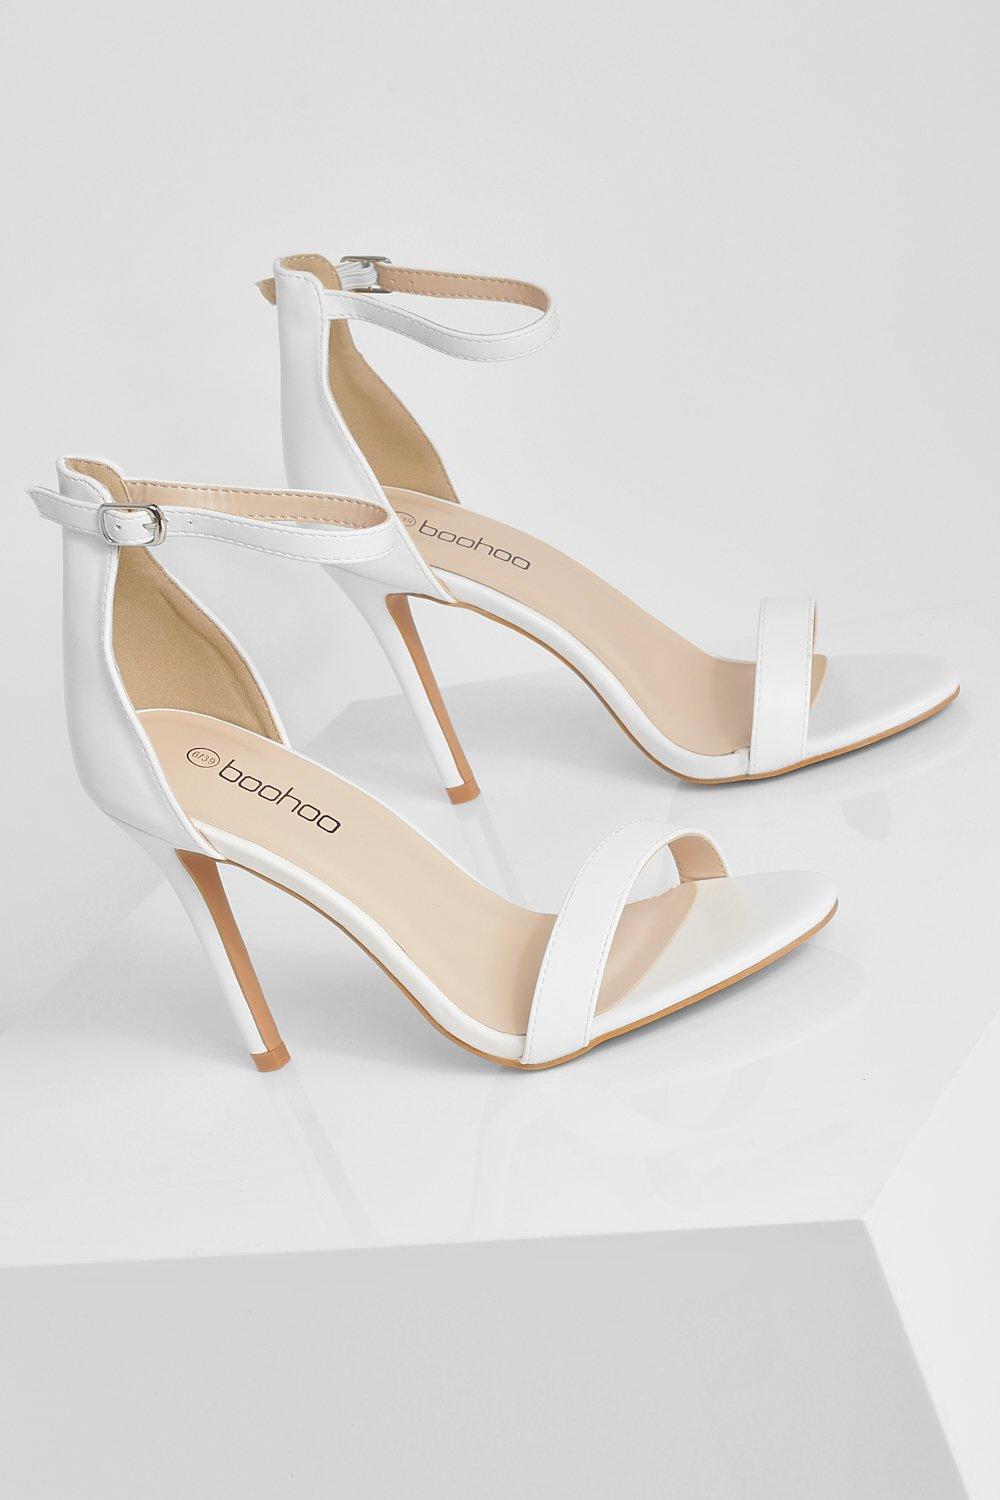 basic white heels